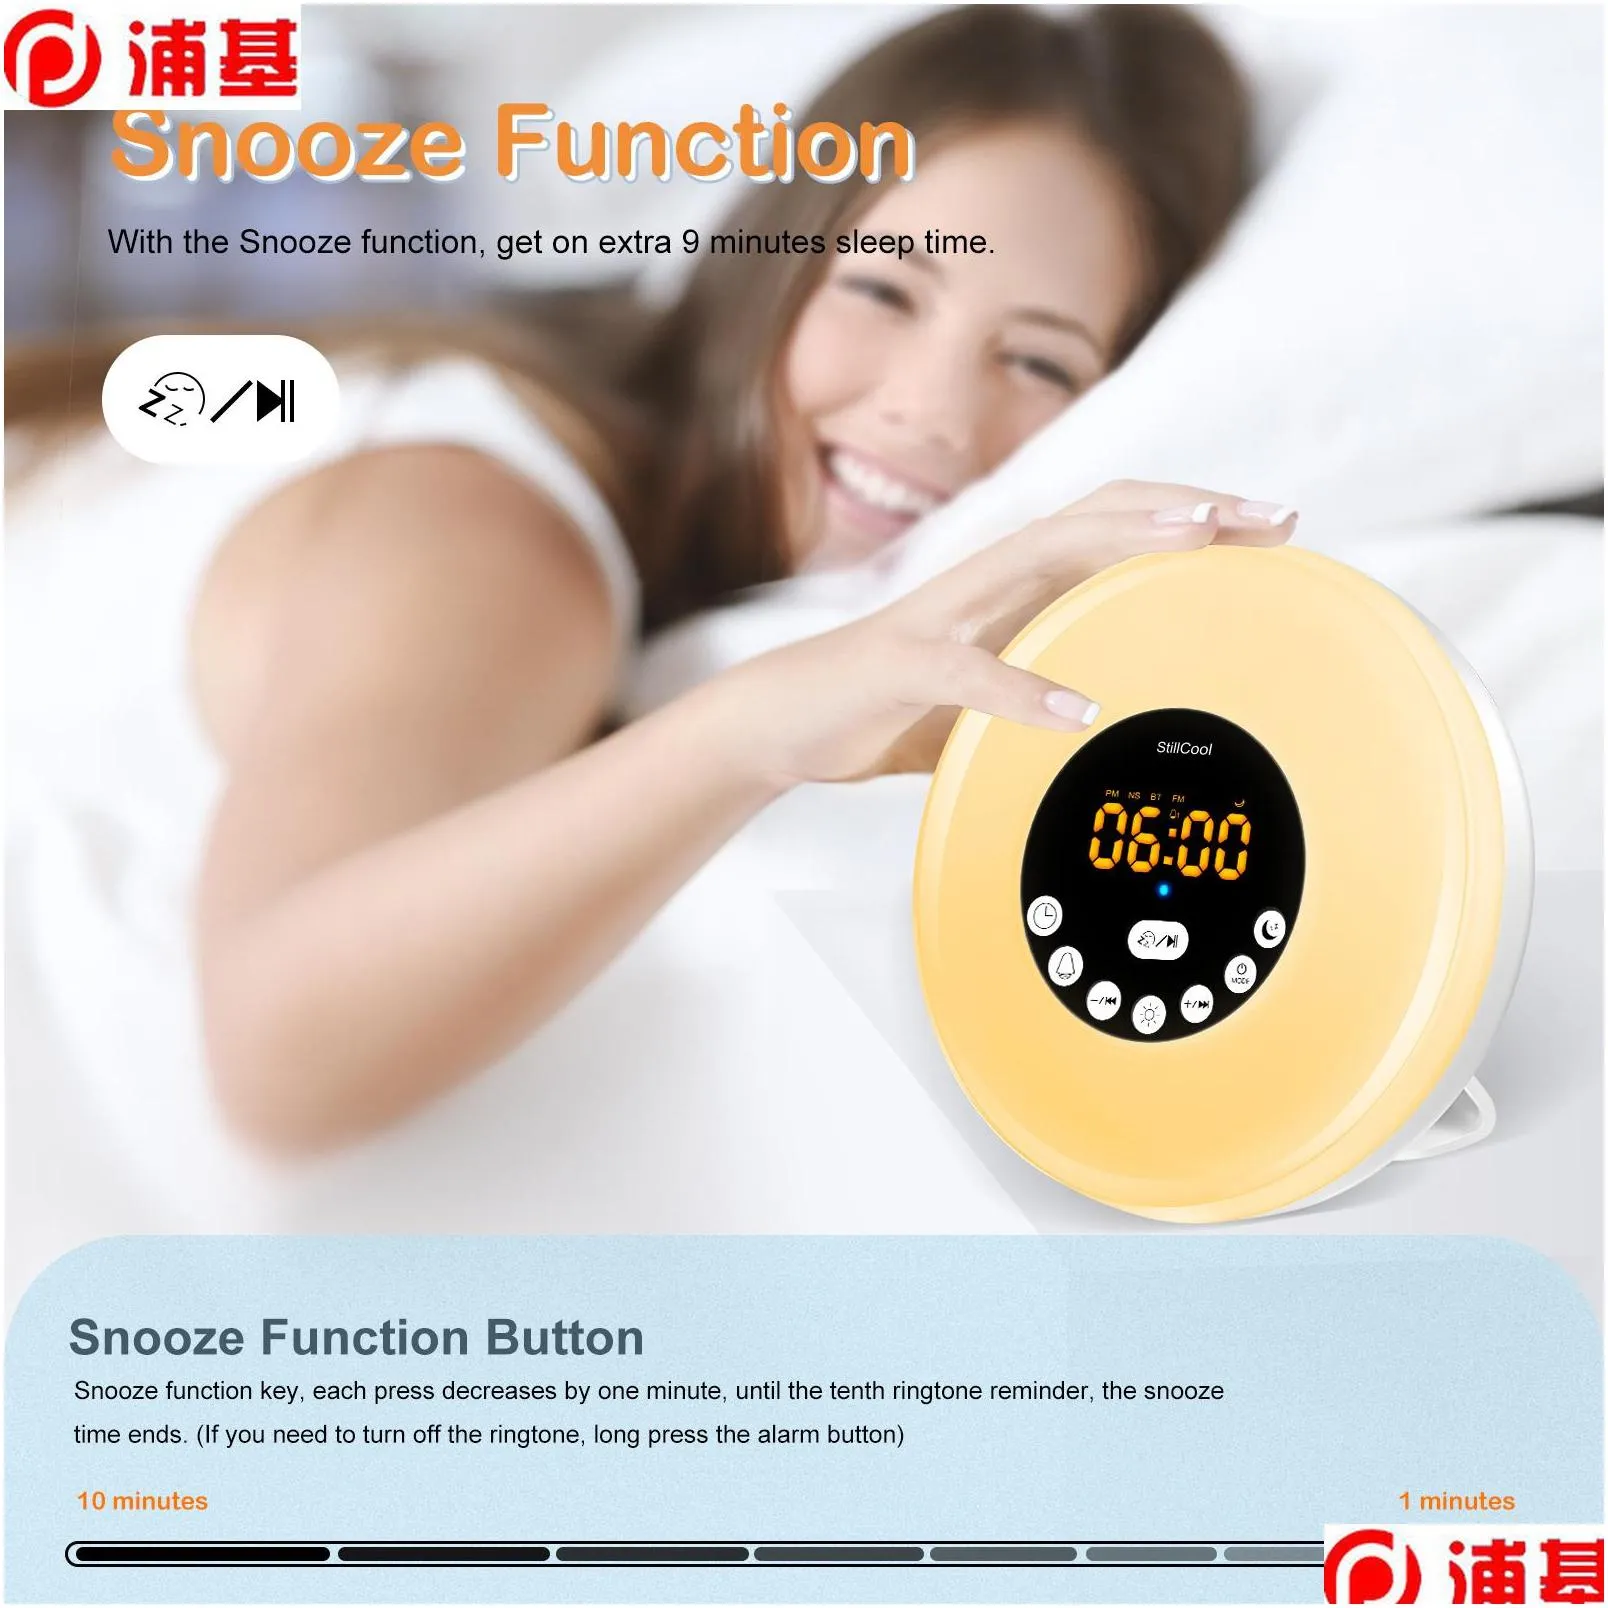 stillcool alarm clock wake up light sunrise sunset simulation table bedside lamp eyes protection with fm radio nature sounds